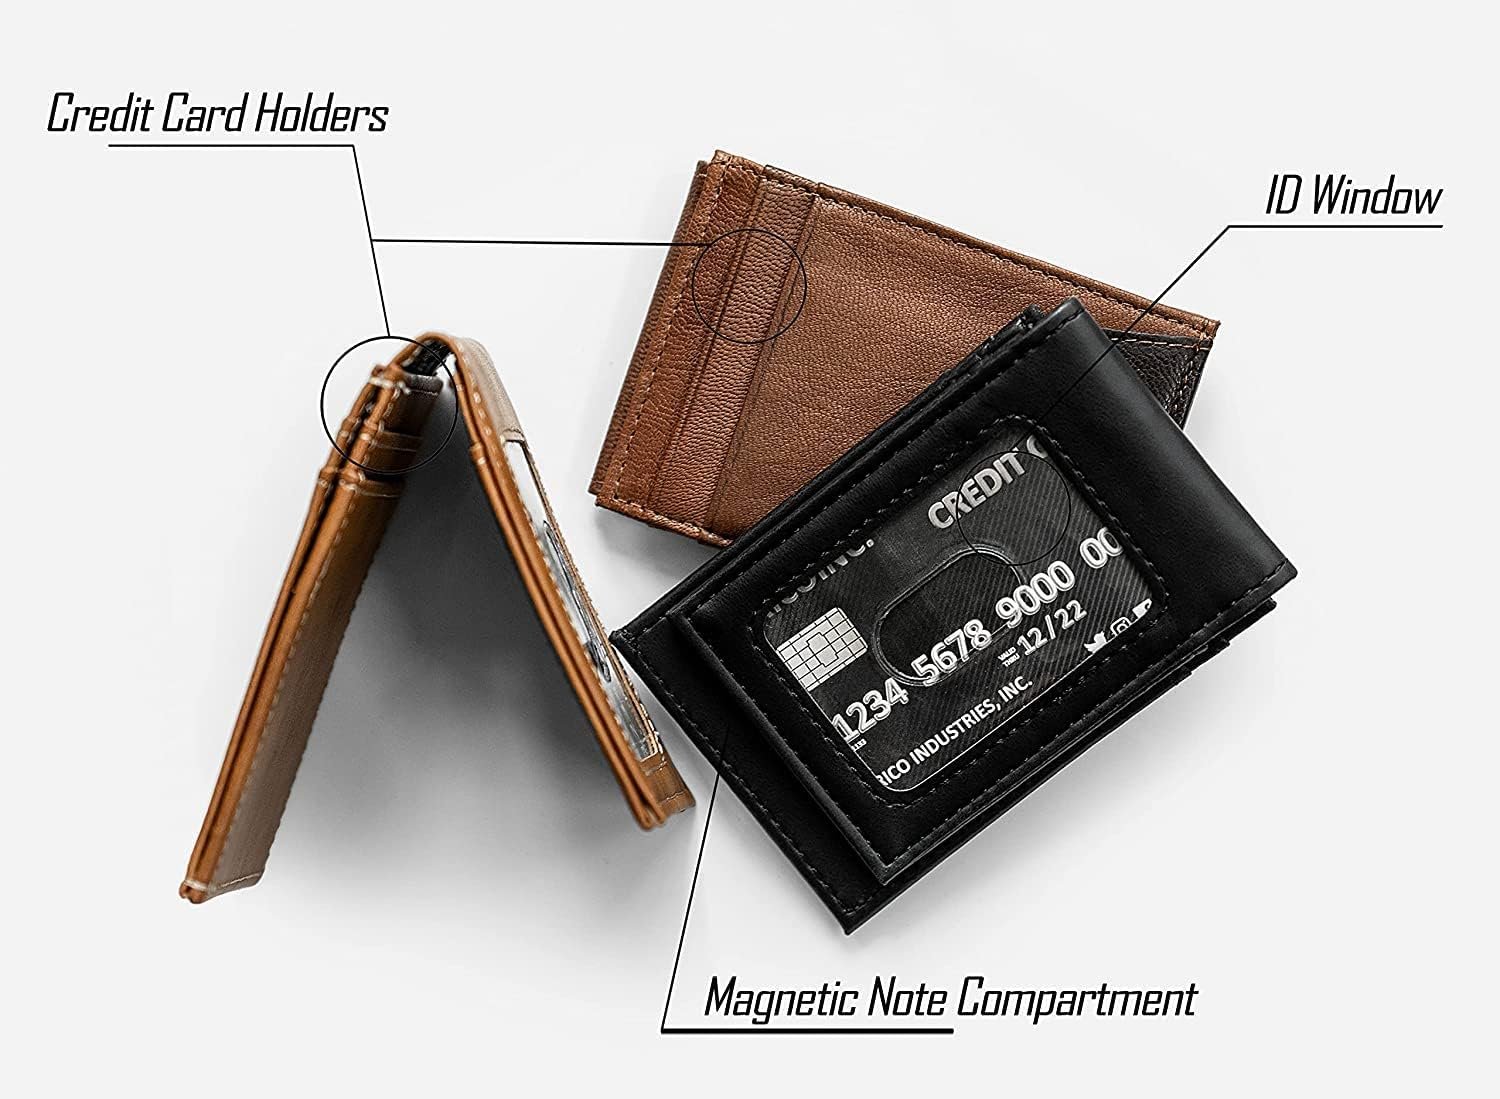 University of Illinois Fighting Illini Premium Brown Leather Wallet, Front Pocket Magnetic Money Clip, Laser Engraved, Vegan